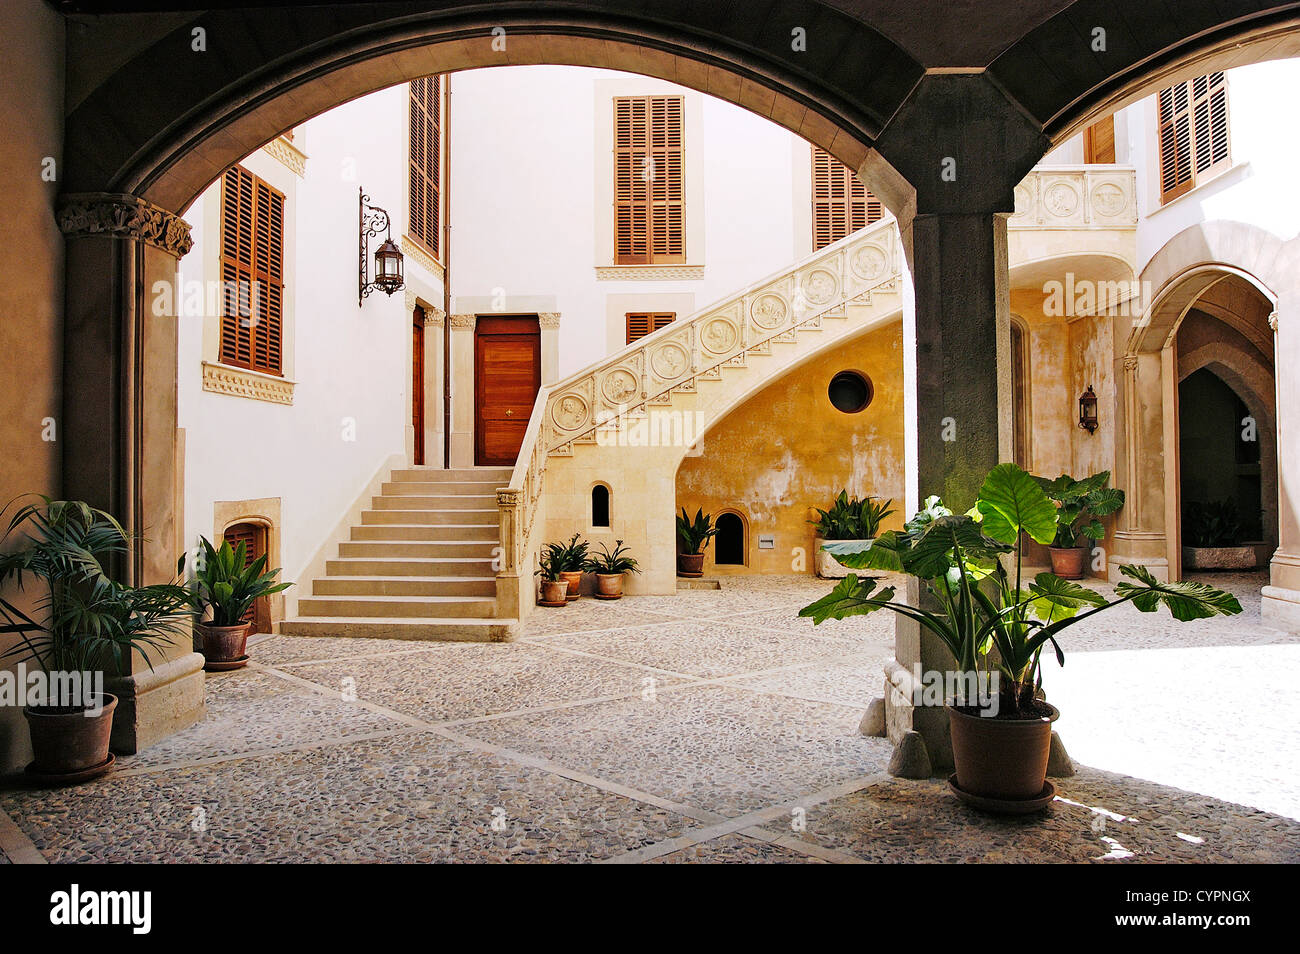 courtyard a mansion in Palma de Mallorca Balearic Islands Spain patio de una casa palacio en palma de mallorca islas baleares Stock Photo